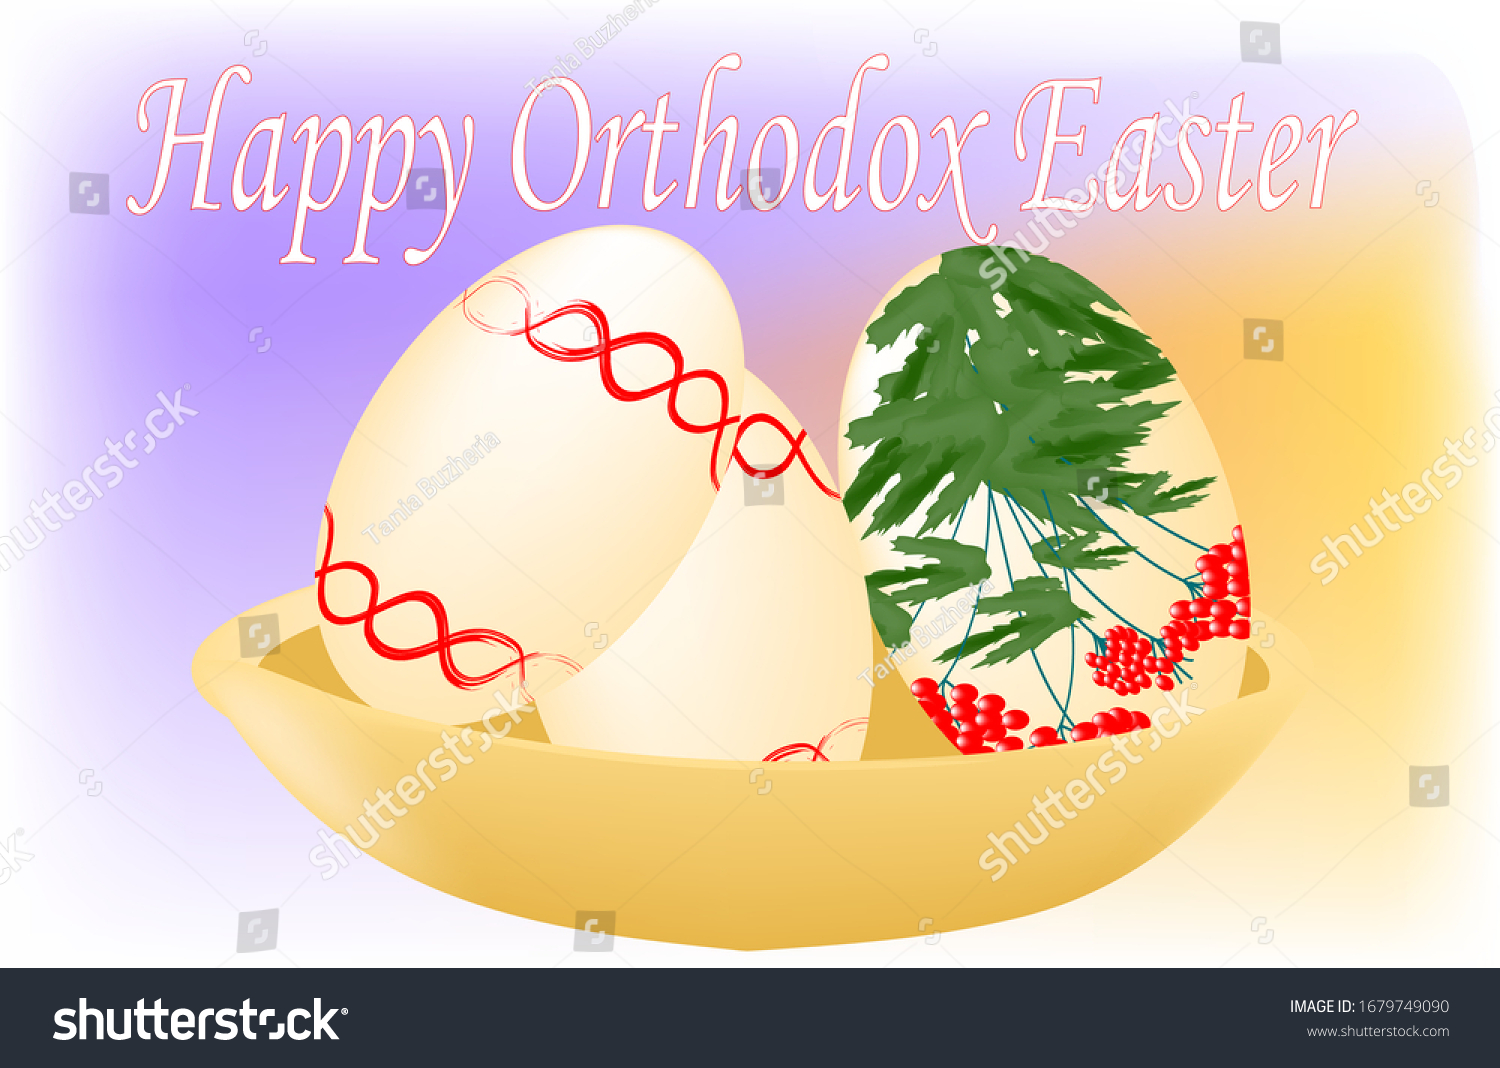 SVG of Orthodox Easter holiday card, three colored eggs in a bowl, viburnum and vishivanka, on purple-orange background svg